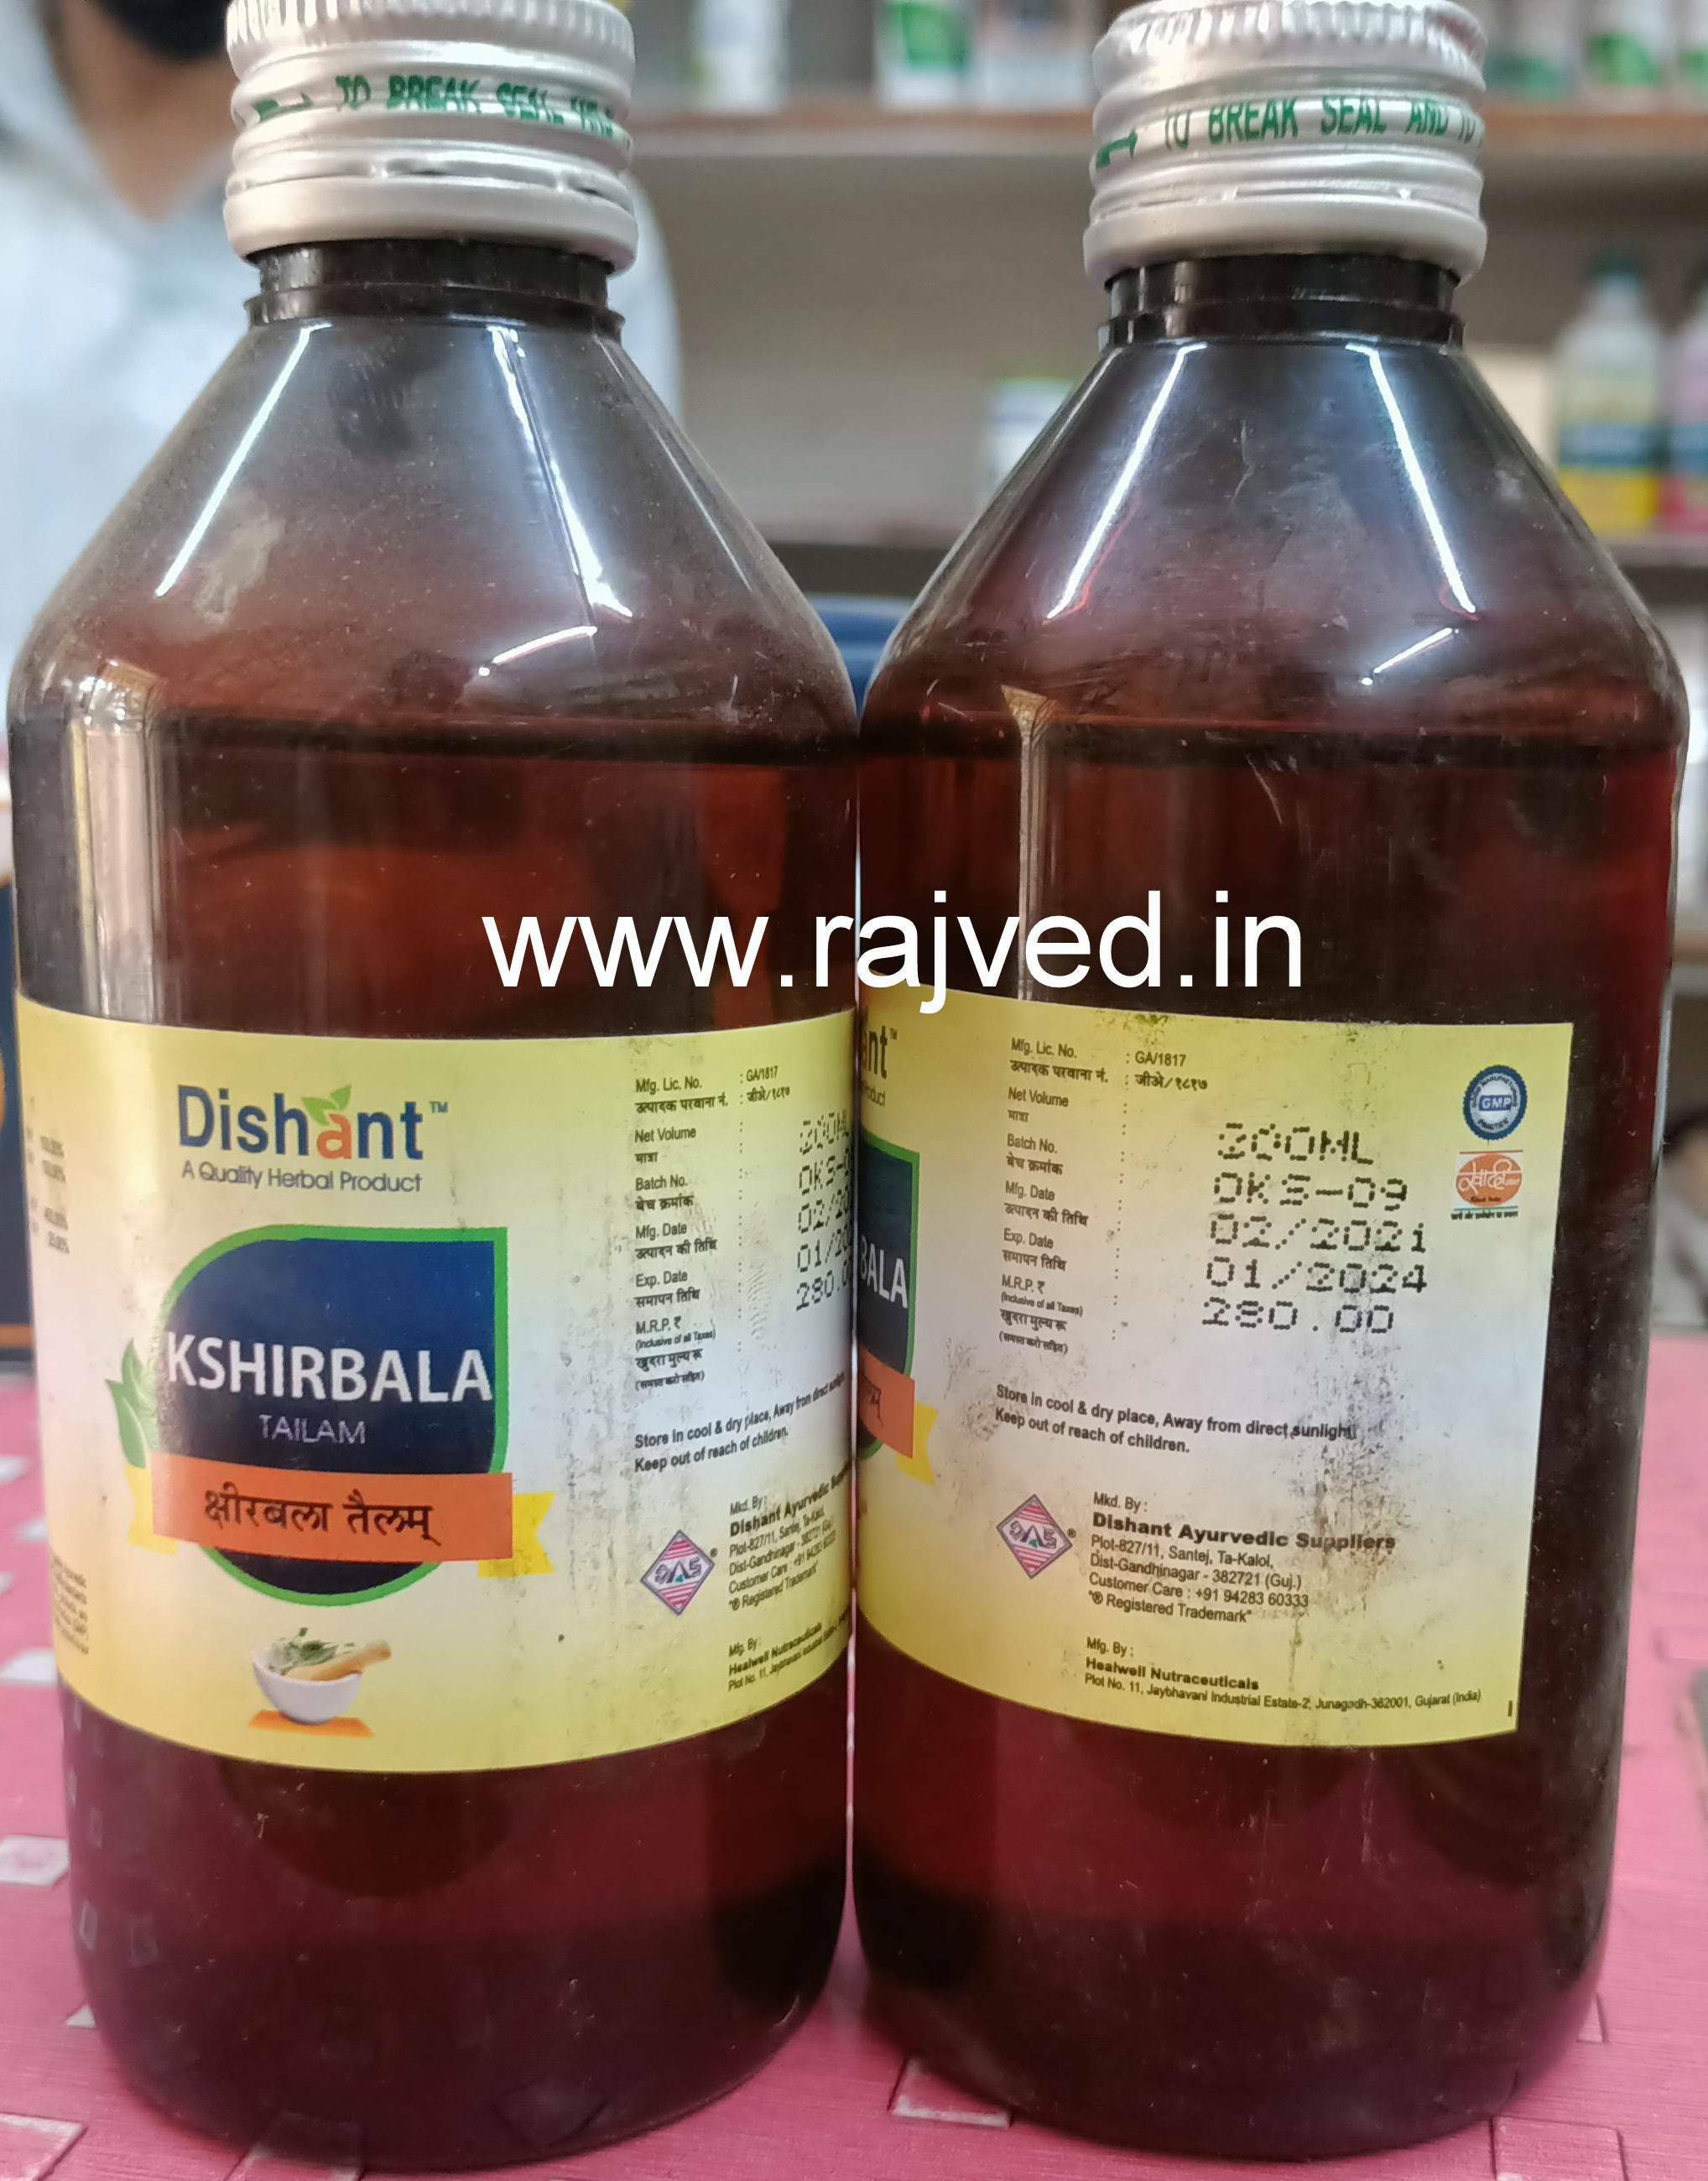 Kshirbala Tail 200 ml dishant ayurvedic suppliers